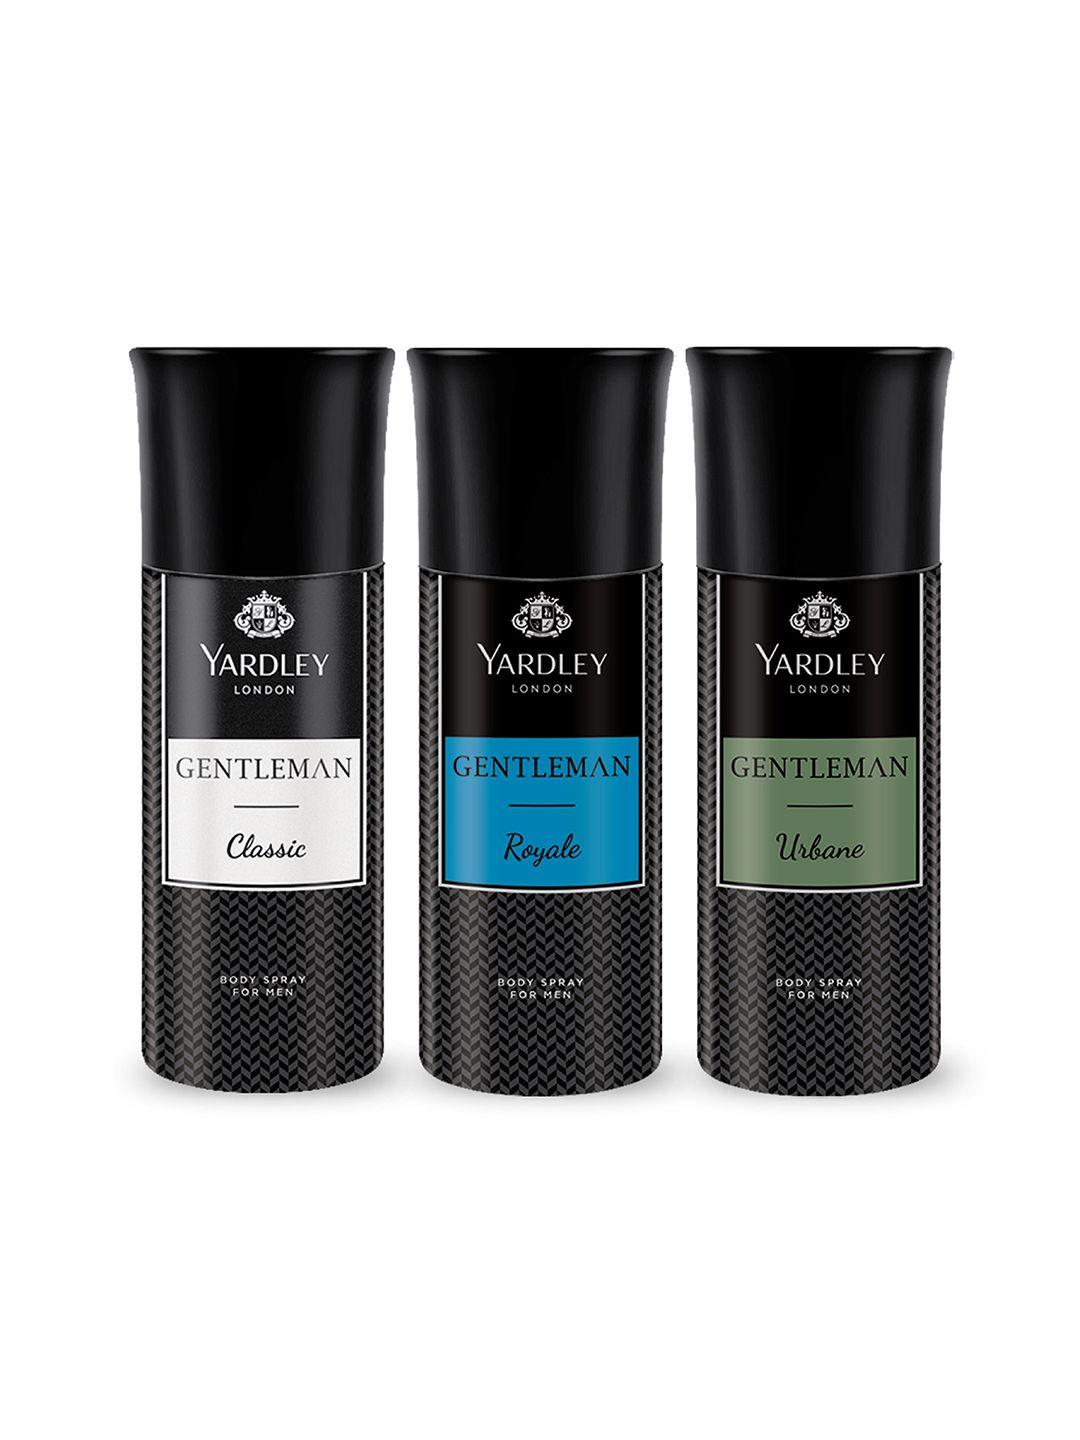 yardley london gentleman set of classic-royale- urbane body spray - 150 ml each